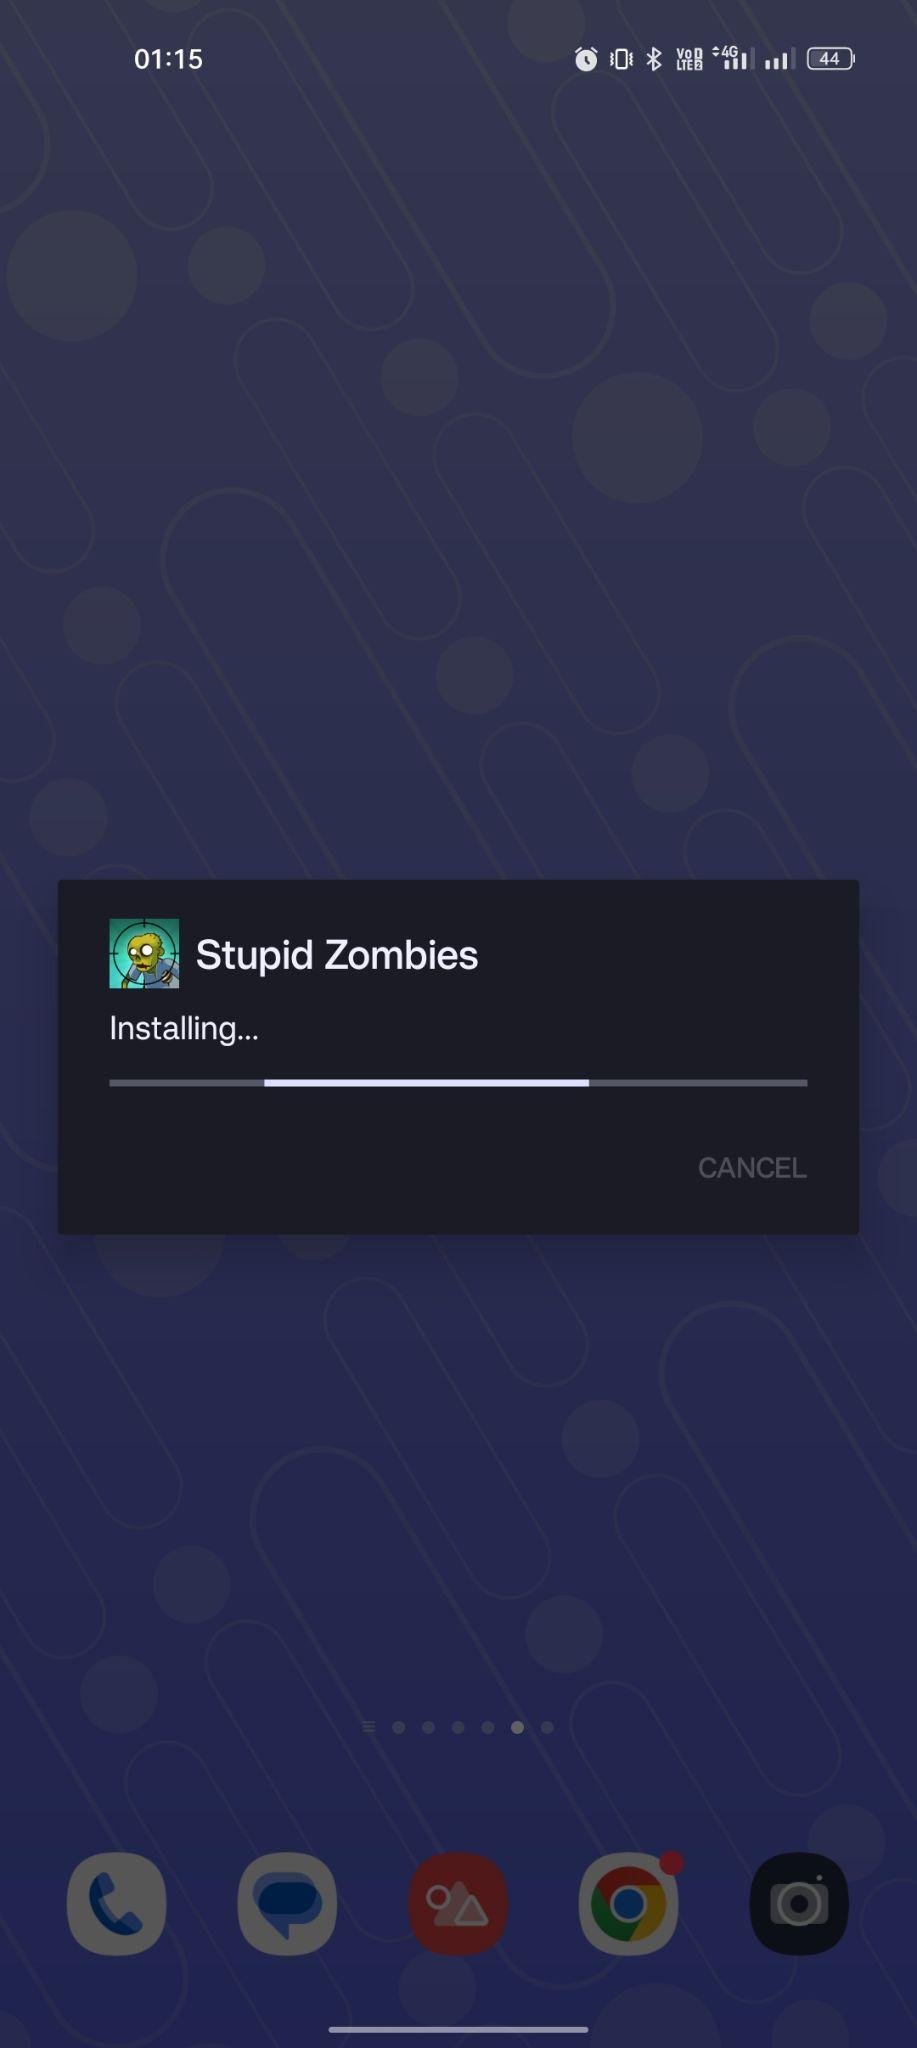 Stupid Zombies apk installing